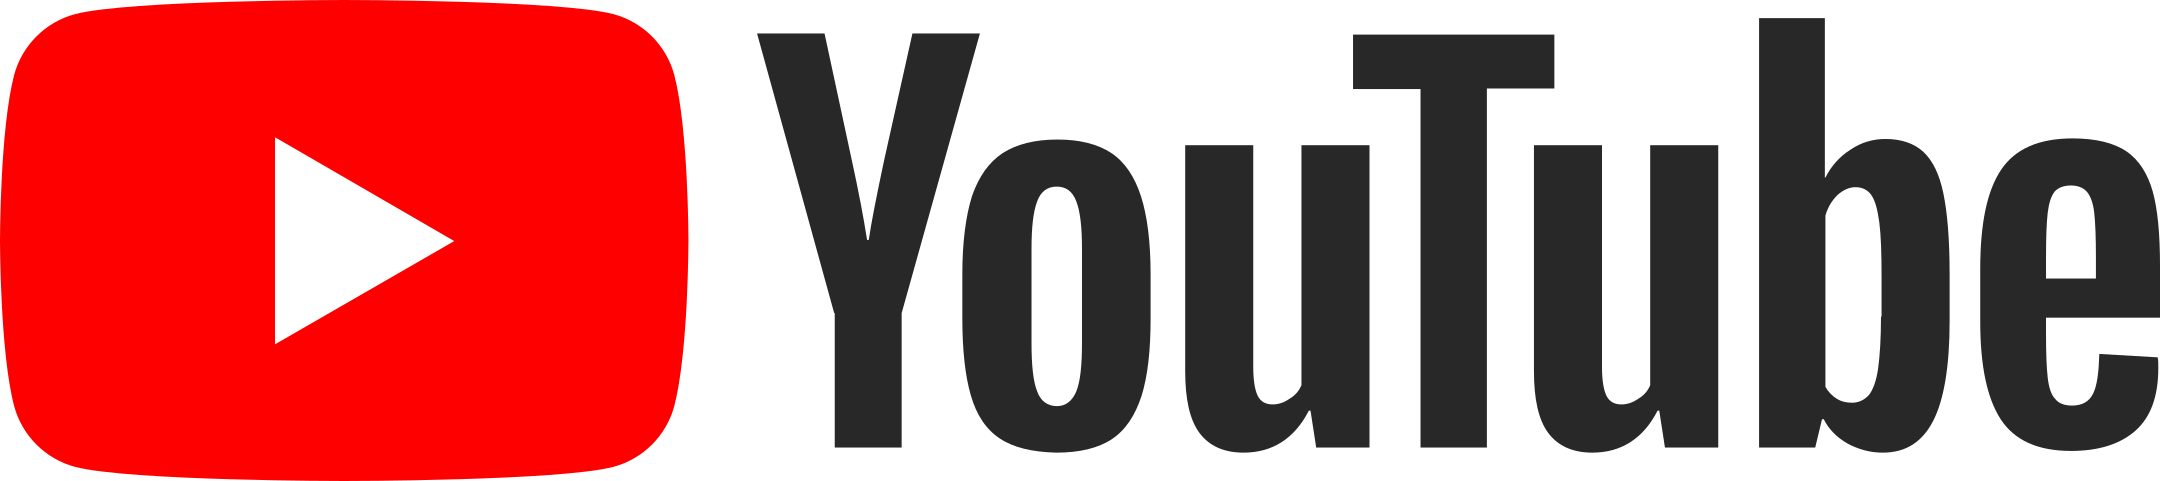 Square YouTube logo Kostenloses PNG-Bild